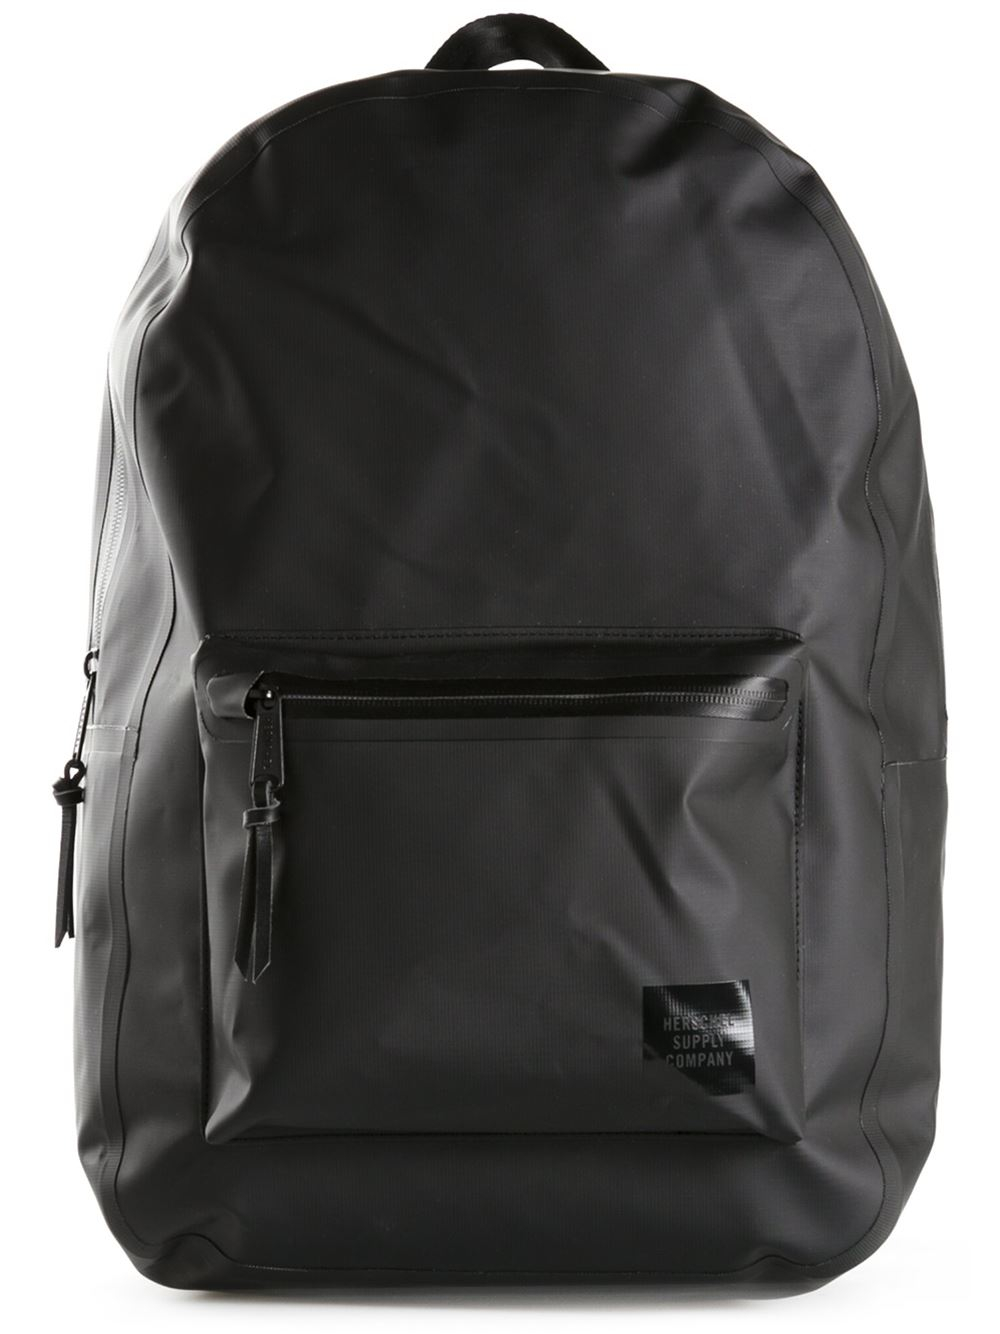 Herschel Supply Co. Classic Backpack in Black for Men - Lyst